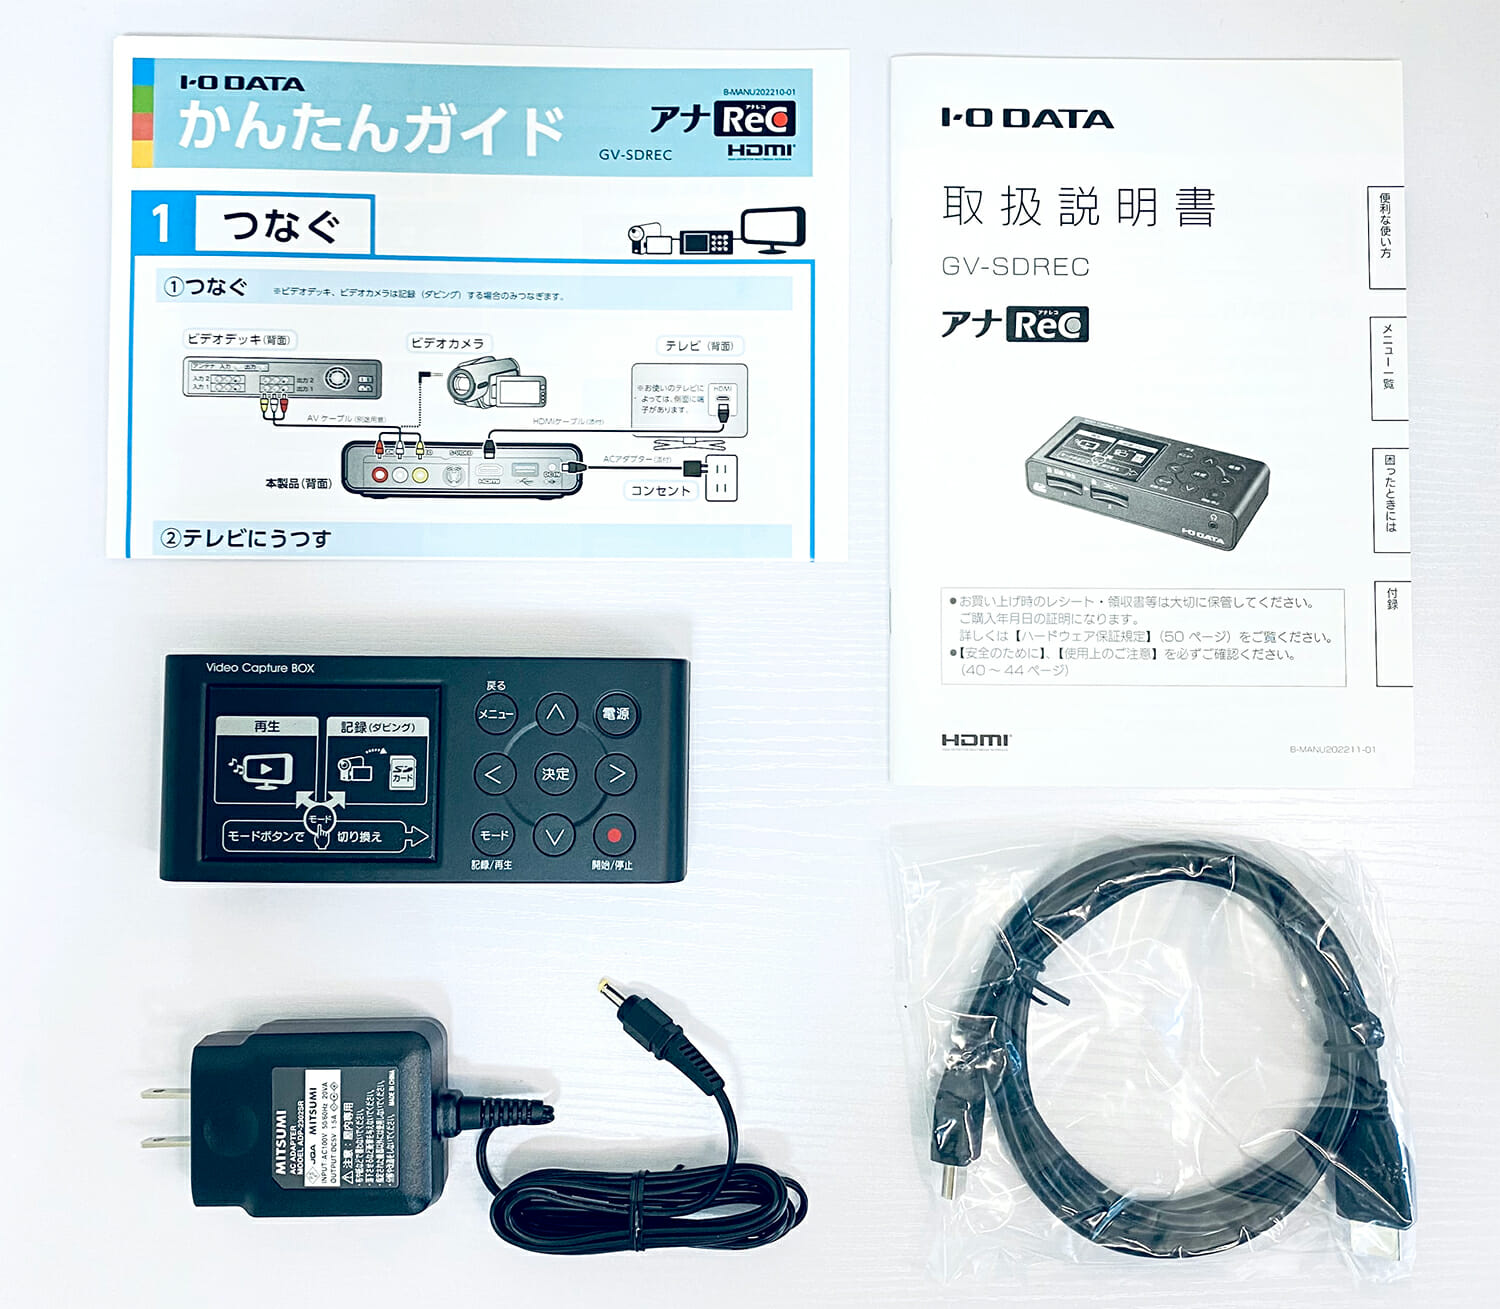 I-O DATA ビデオ VHS 8mm ダビング SDカード HDD保存 パソコン不要